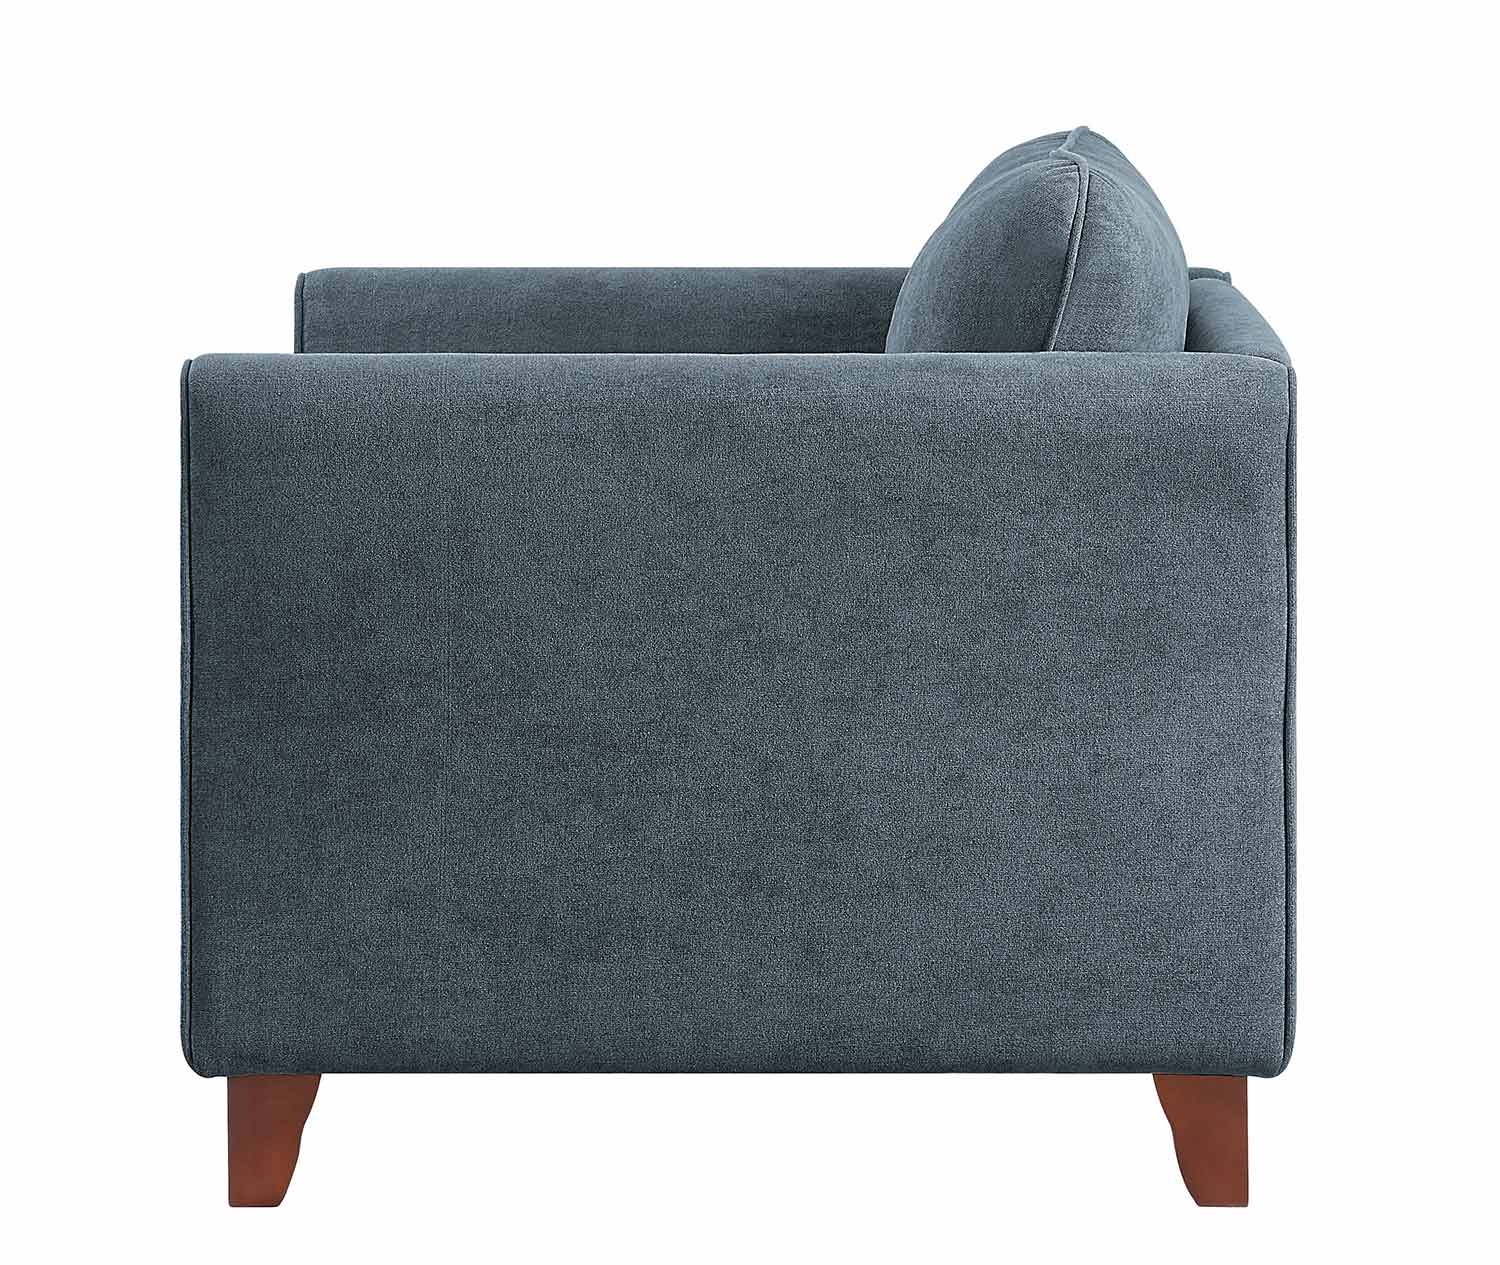 Homelegance Barberton Chair - Dark gray